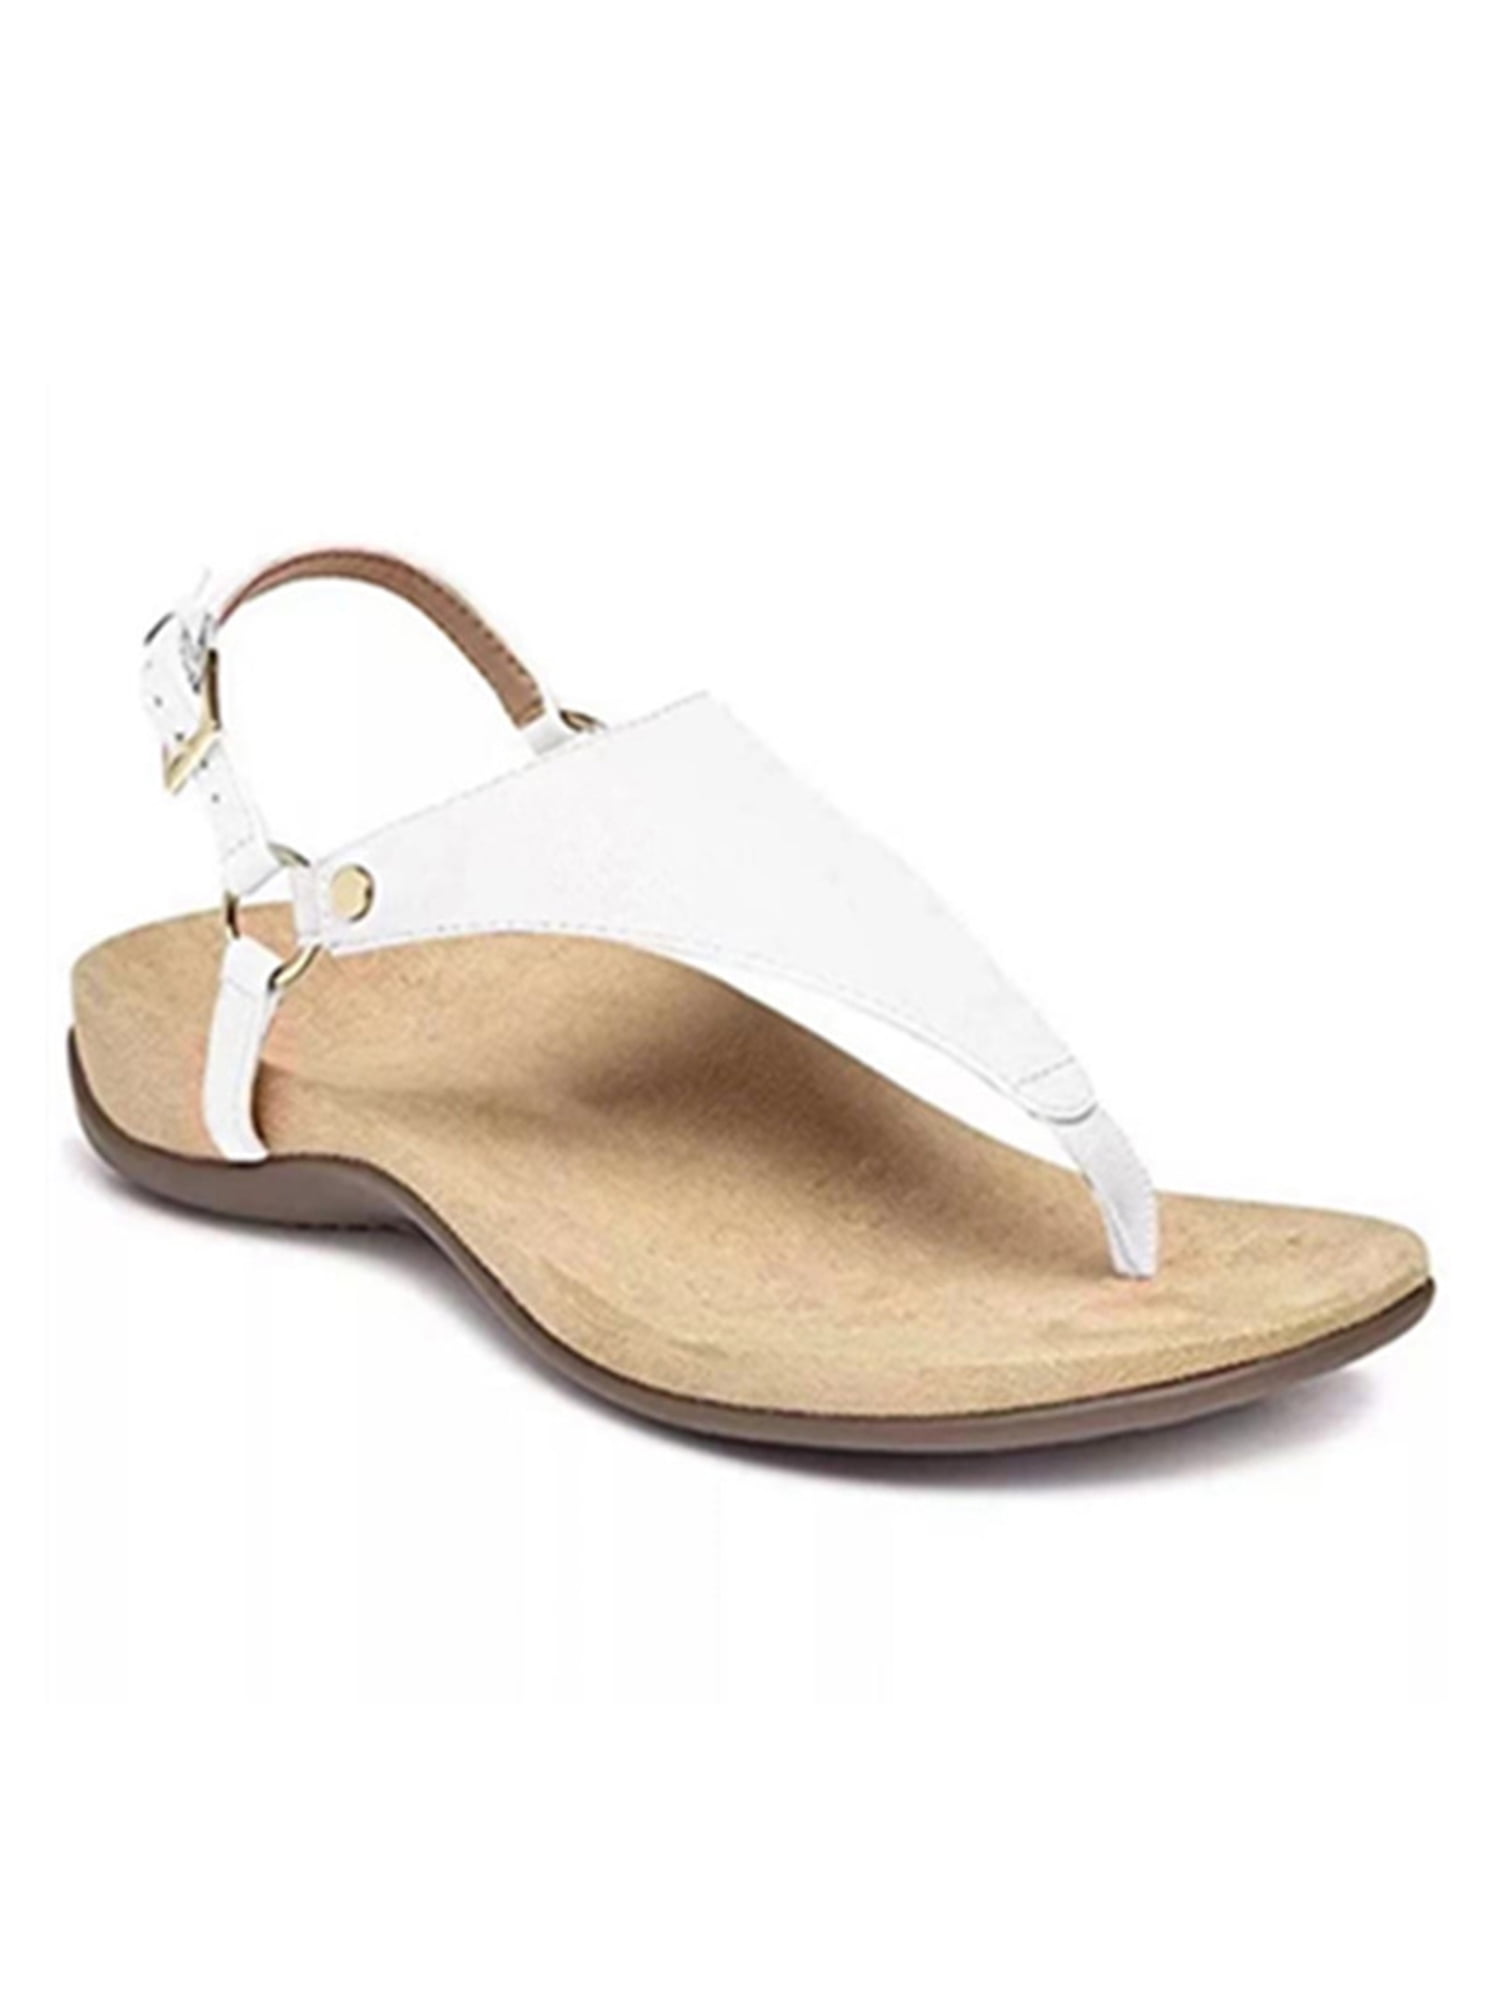 Womens Buckle Sandals Shoes Thong Flip Flops Wedge T-Strap Summer Beach Slipper 